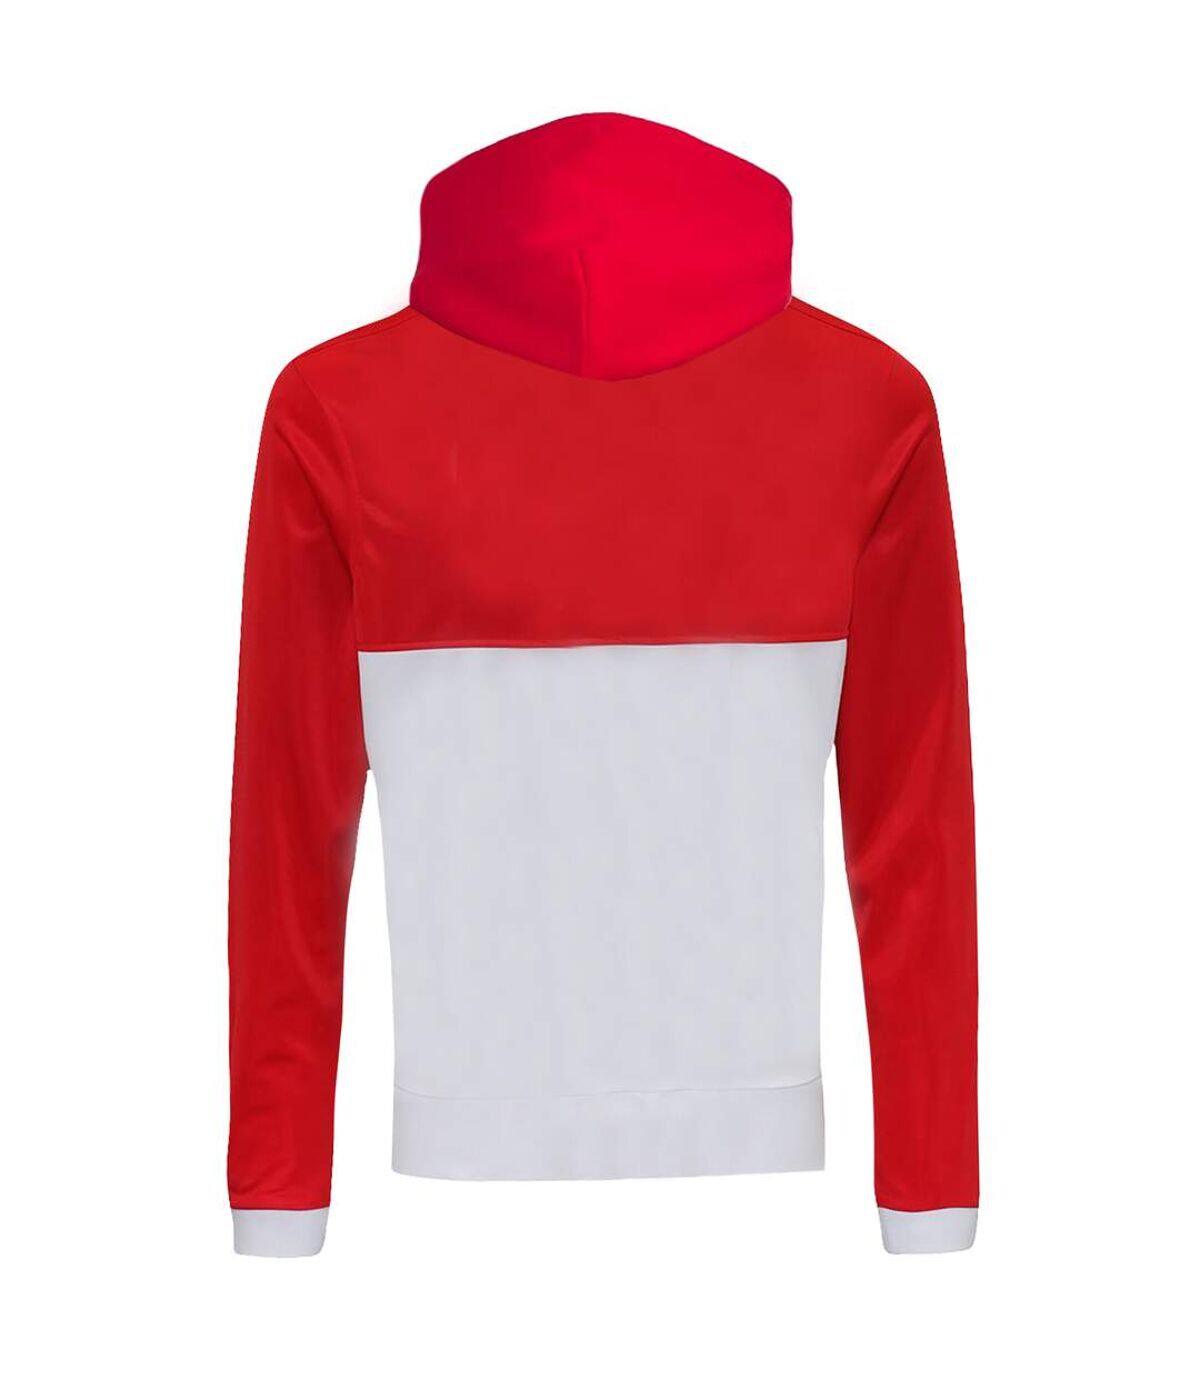 Awdis Mens Retro Zoodie / Hooded Sweatshirt / Hoodie (Fire Red/Arctic White)